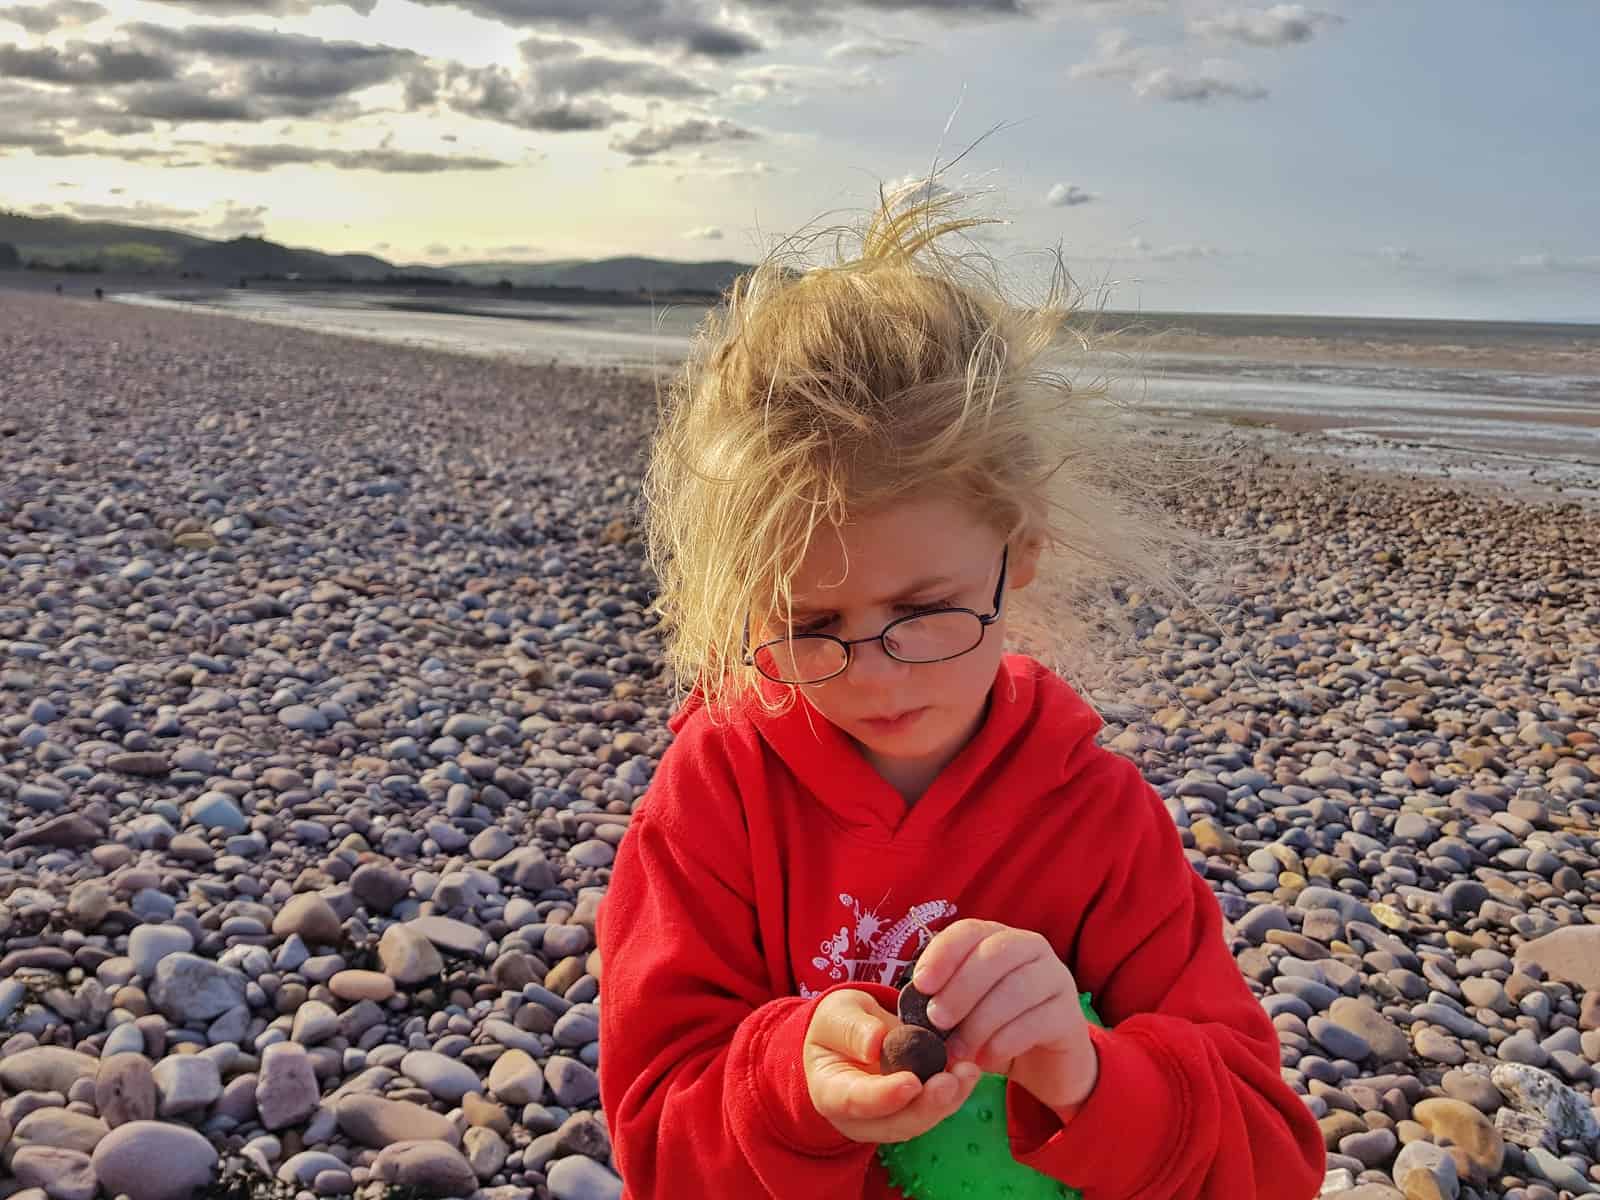 school-reading-girl-on-beach-studying-stones